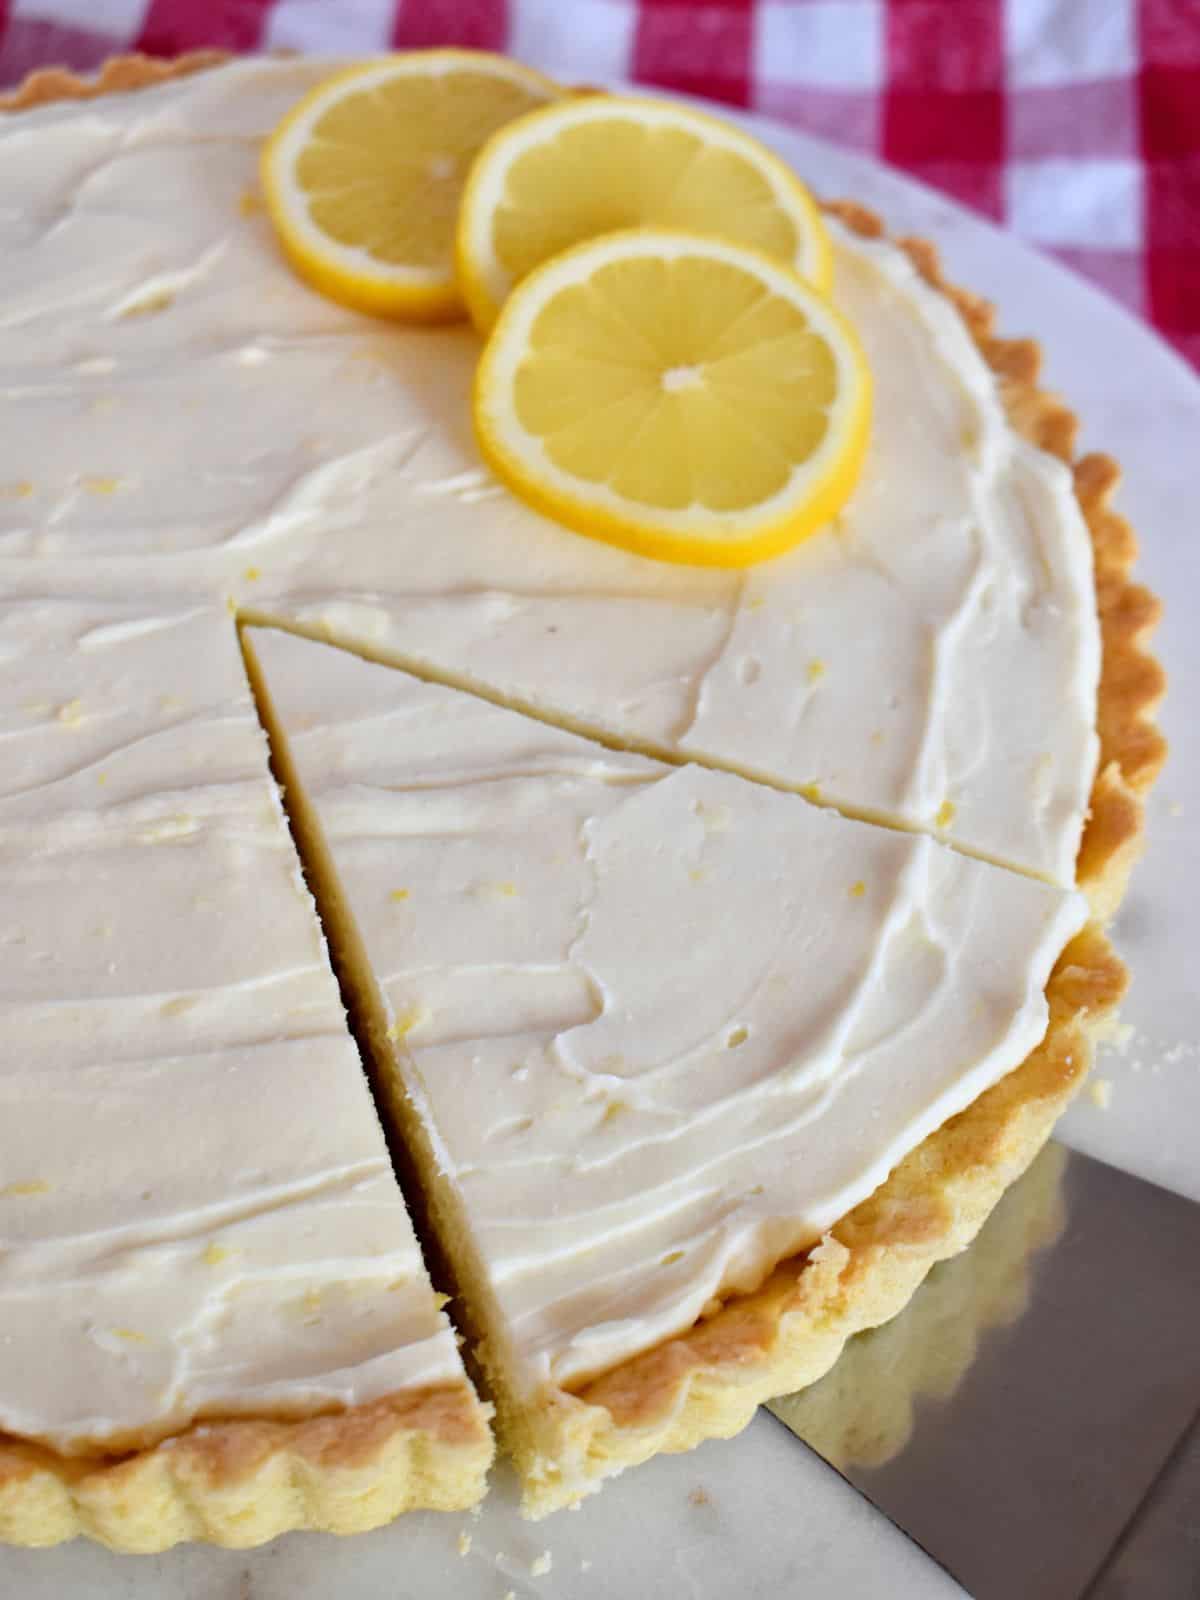 Lemon Mascarpone Tart with a slice cut into it. 